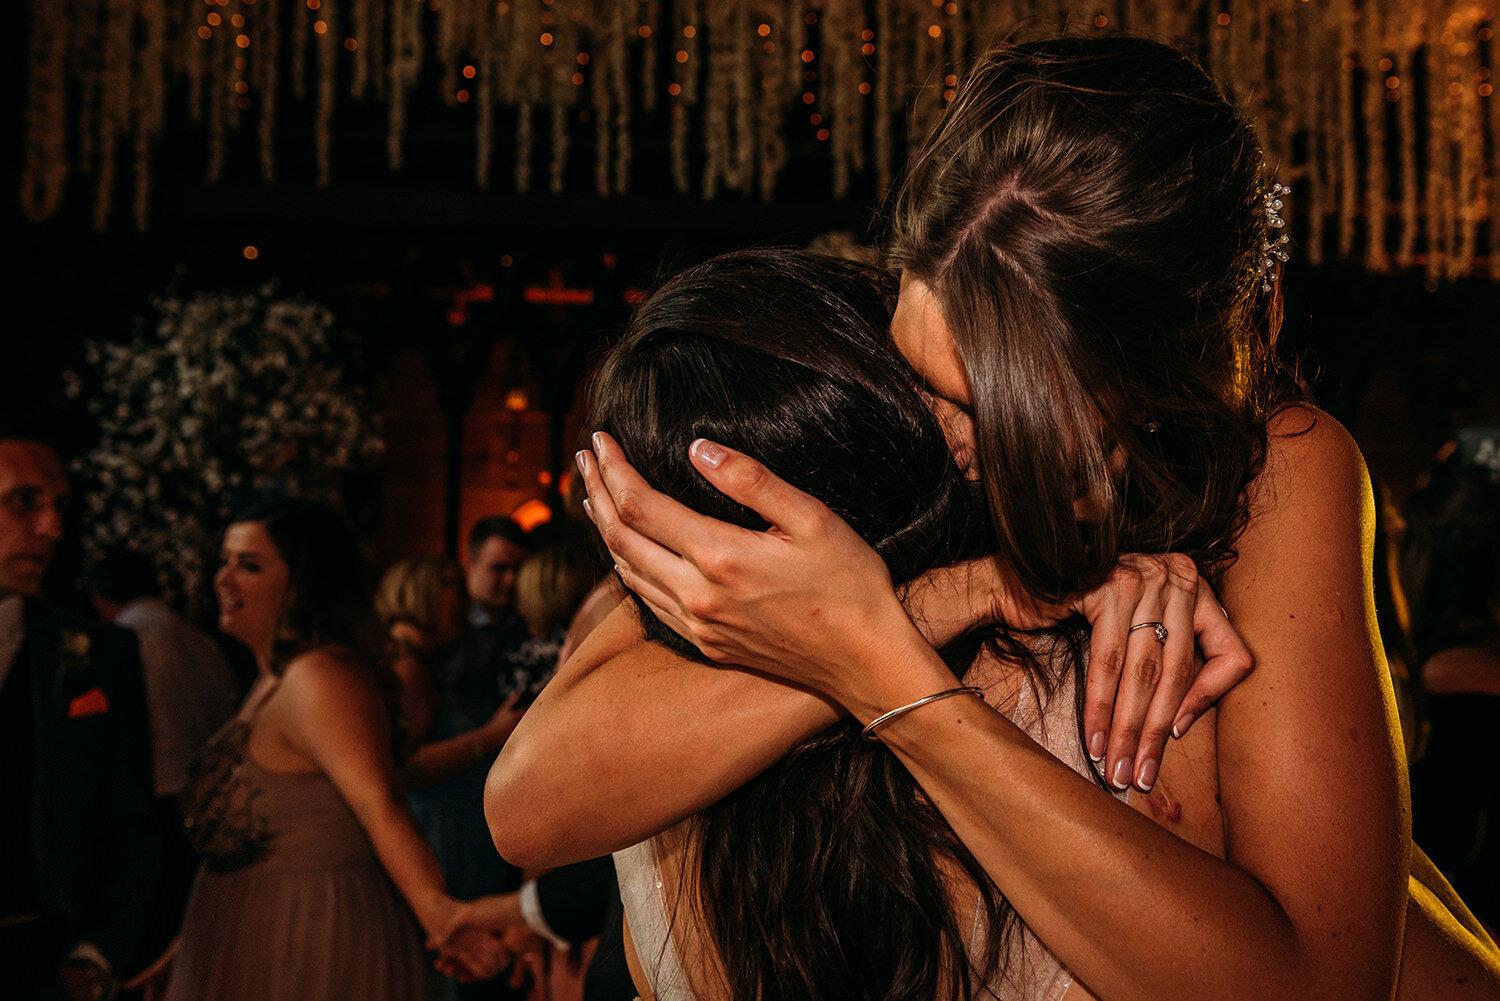  close up hug on the dance floor. 